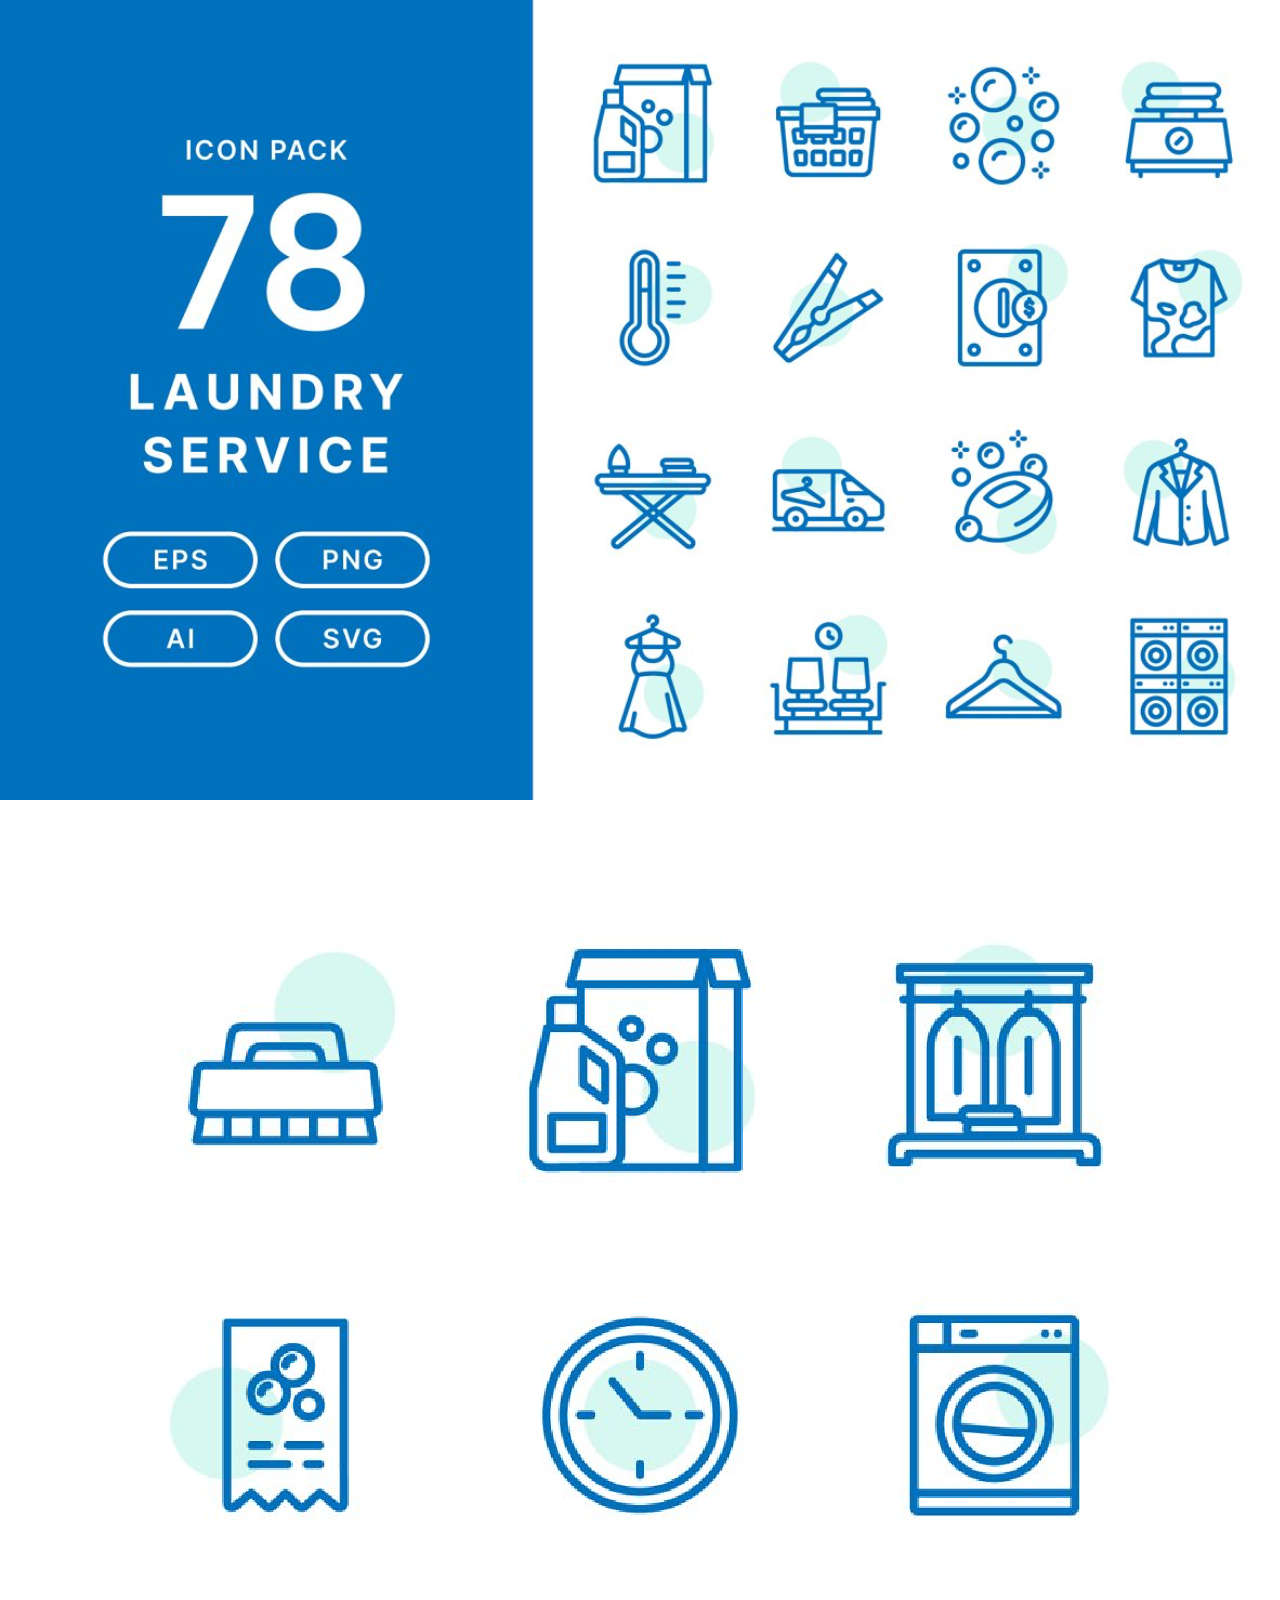 Laundry service icon pack pinterest image.